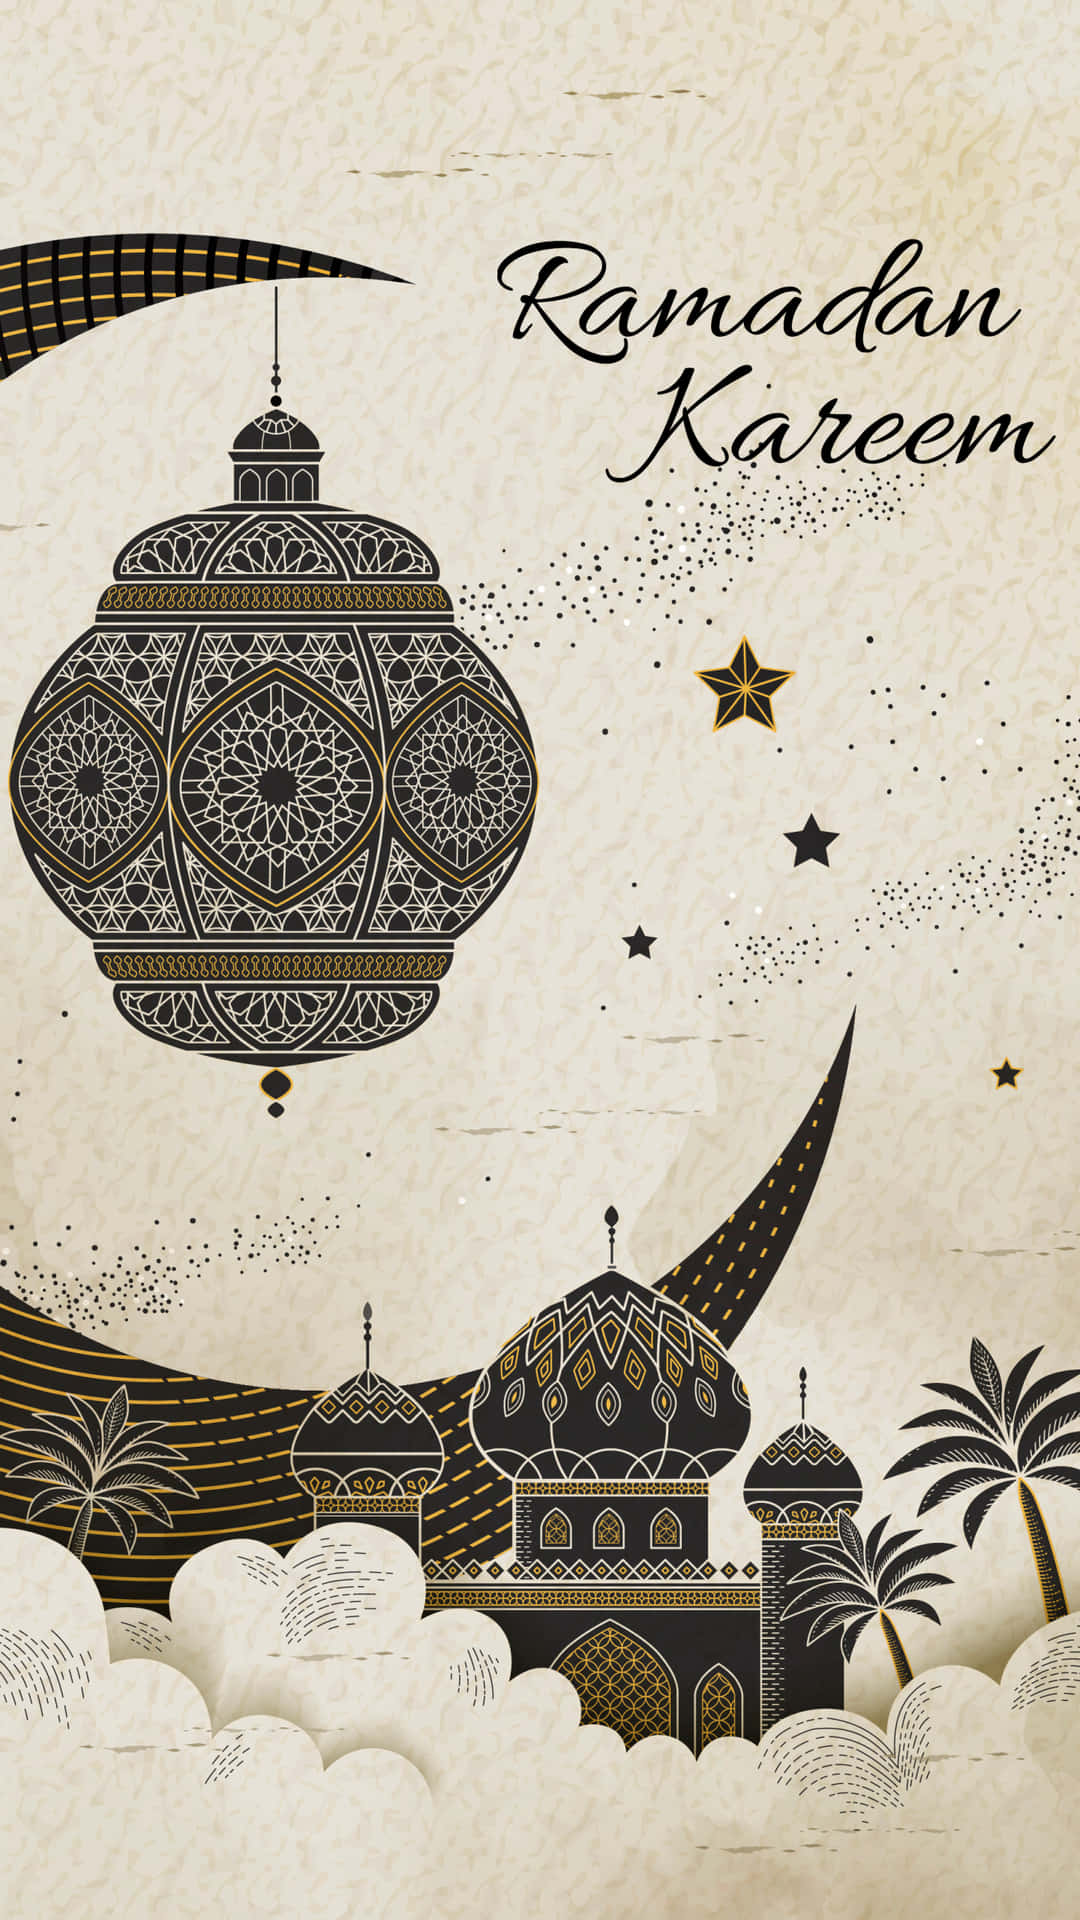 Ramadan Kareem Greeting Design Wallpaper